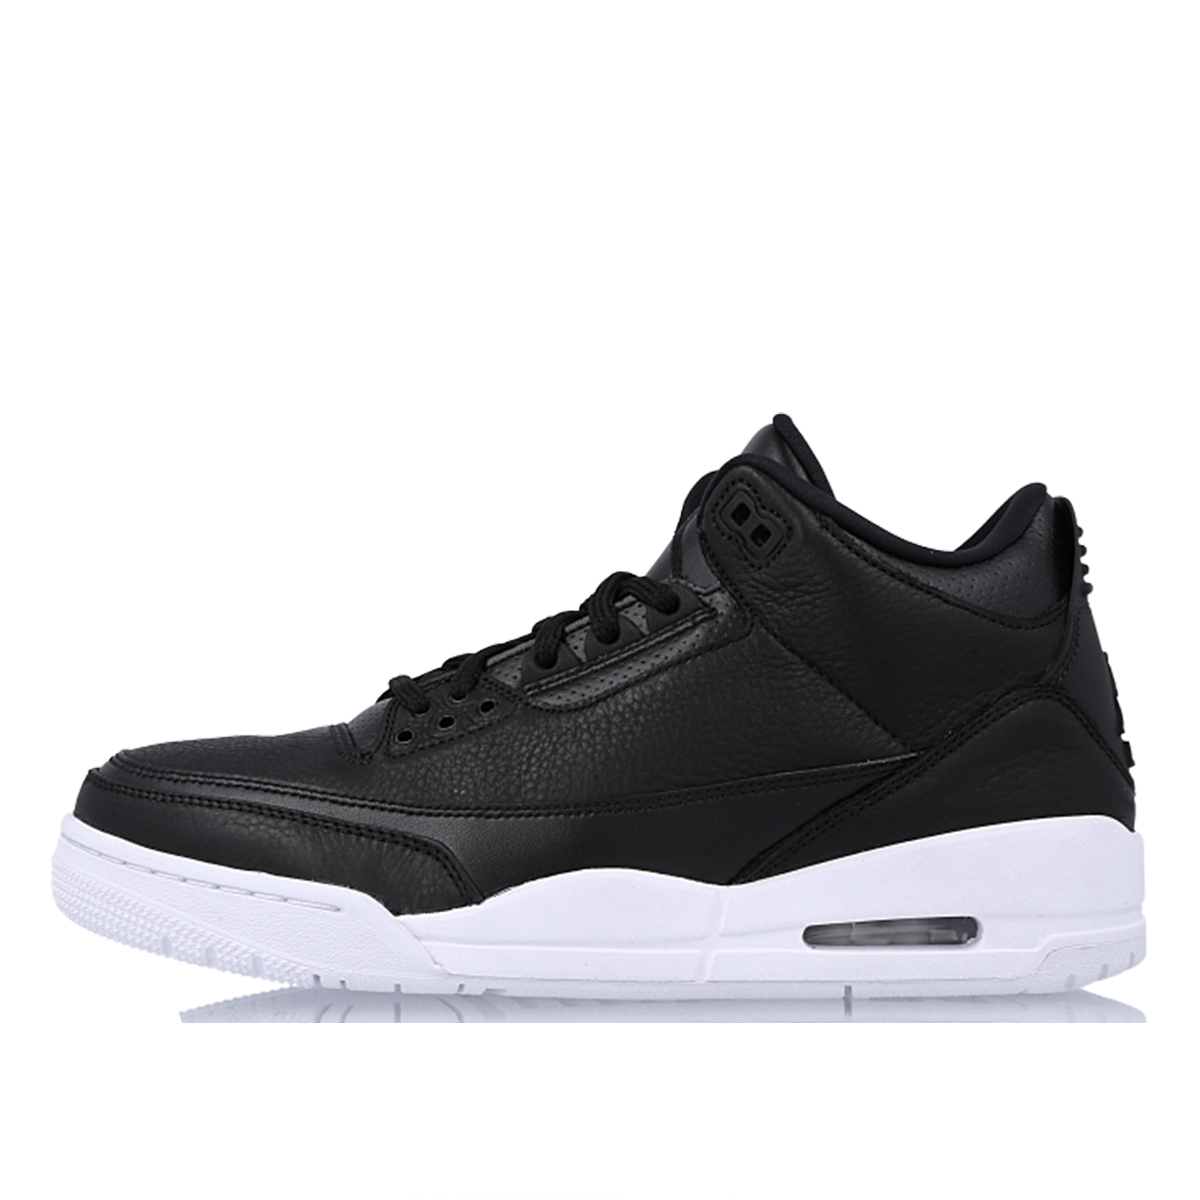 Air Jordan Nike AJ 3 III Retro Cyber Monday (2016) | 136064-020 - KLEKT